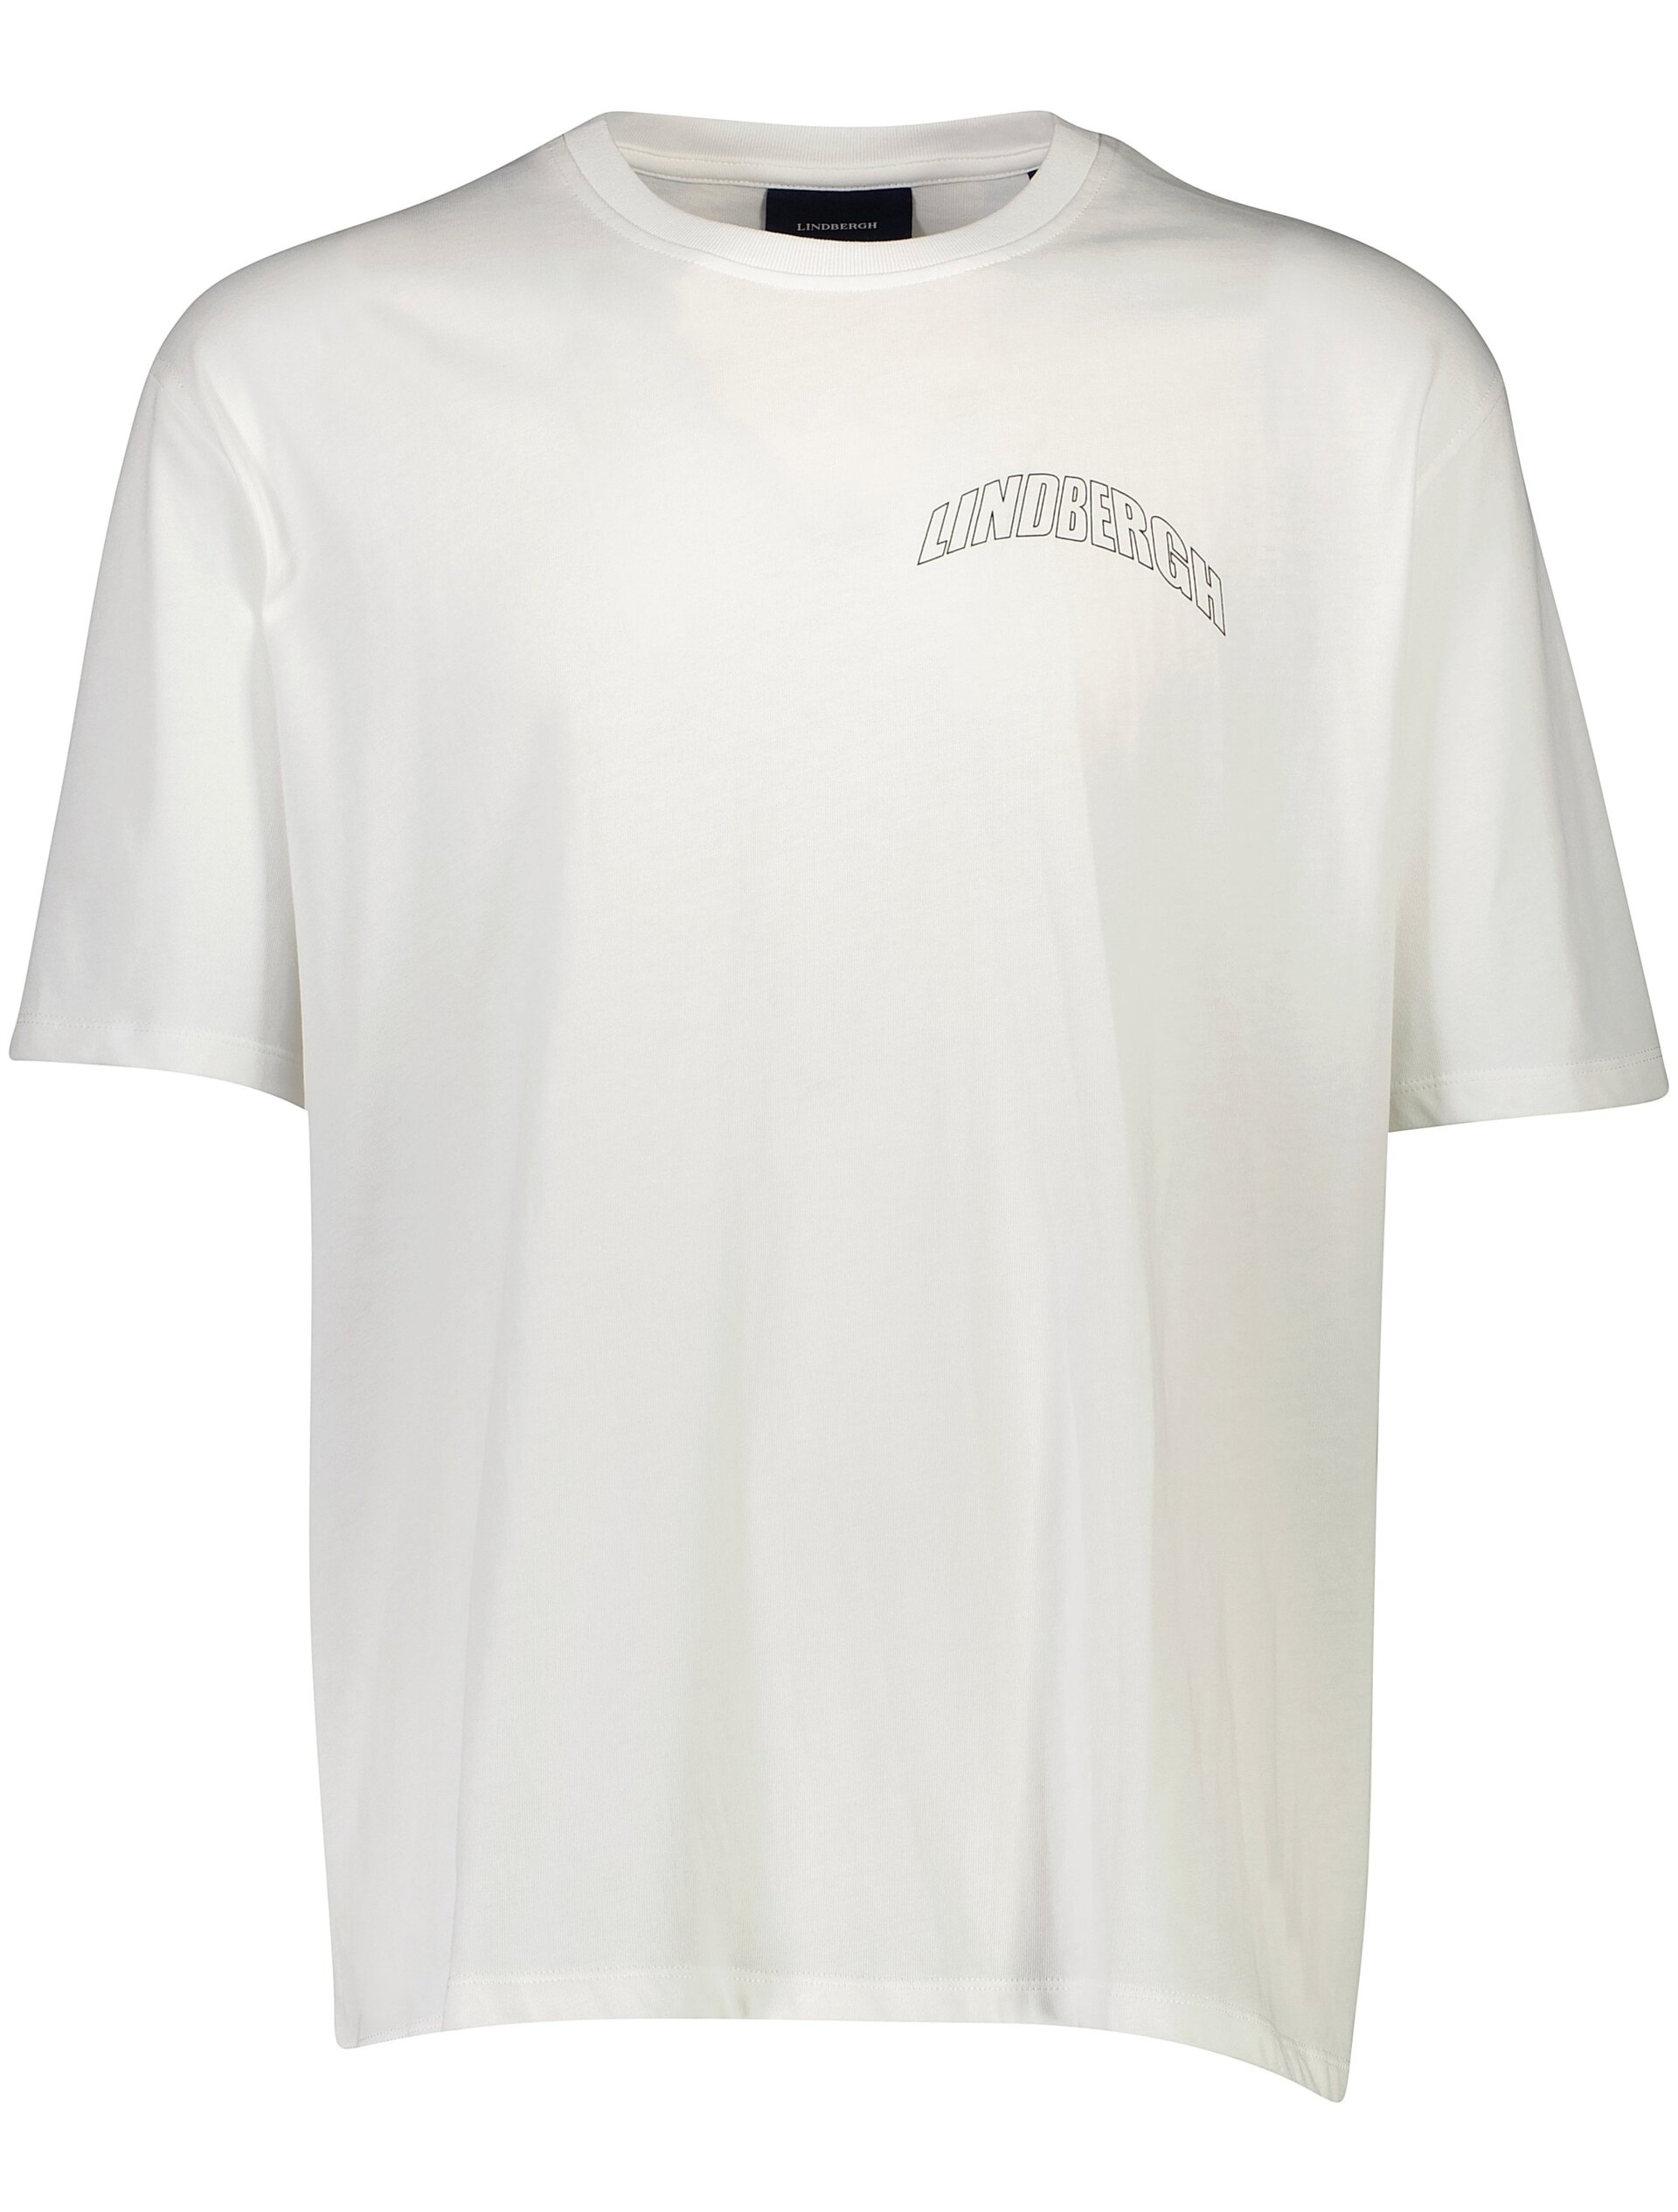 Lindbergh T-shirt weiss / off white